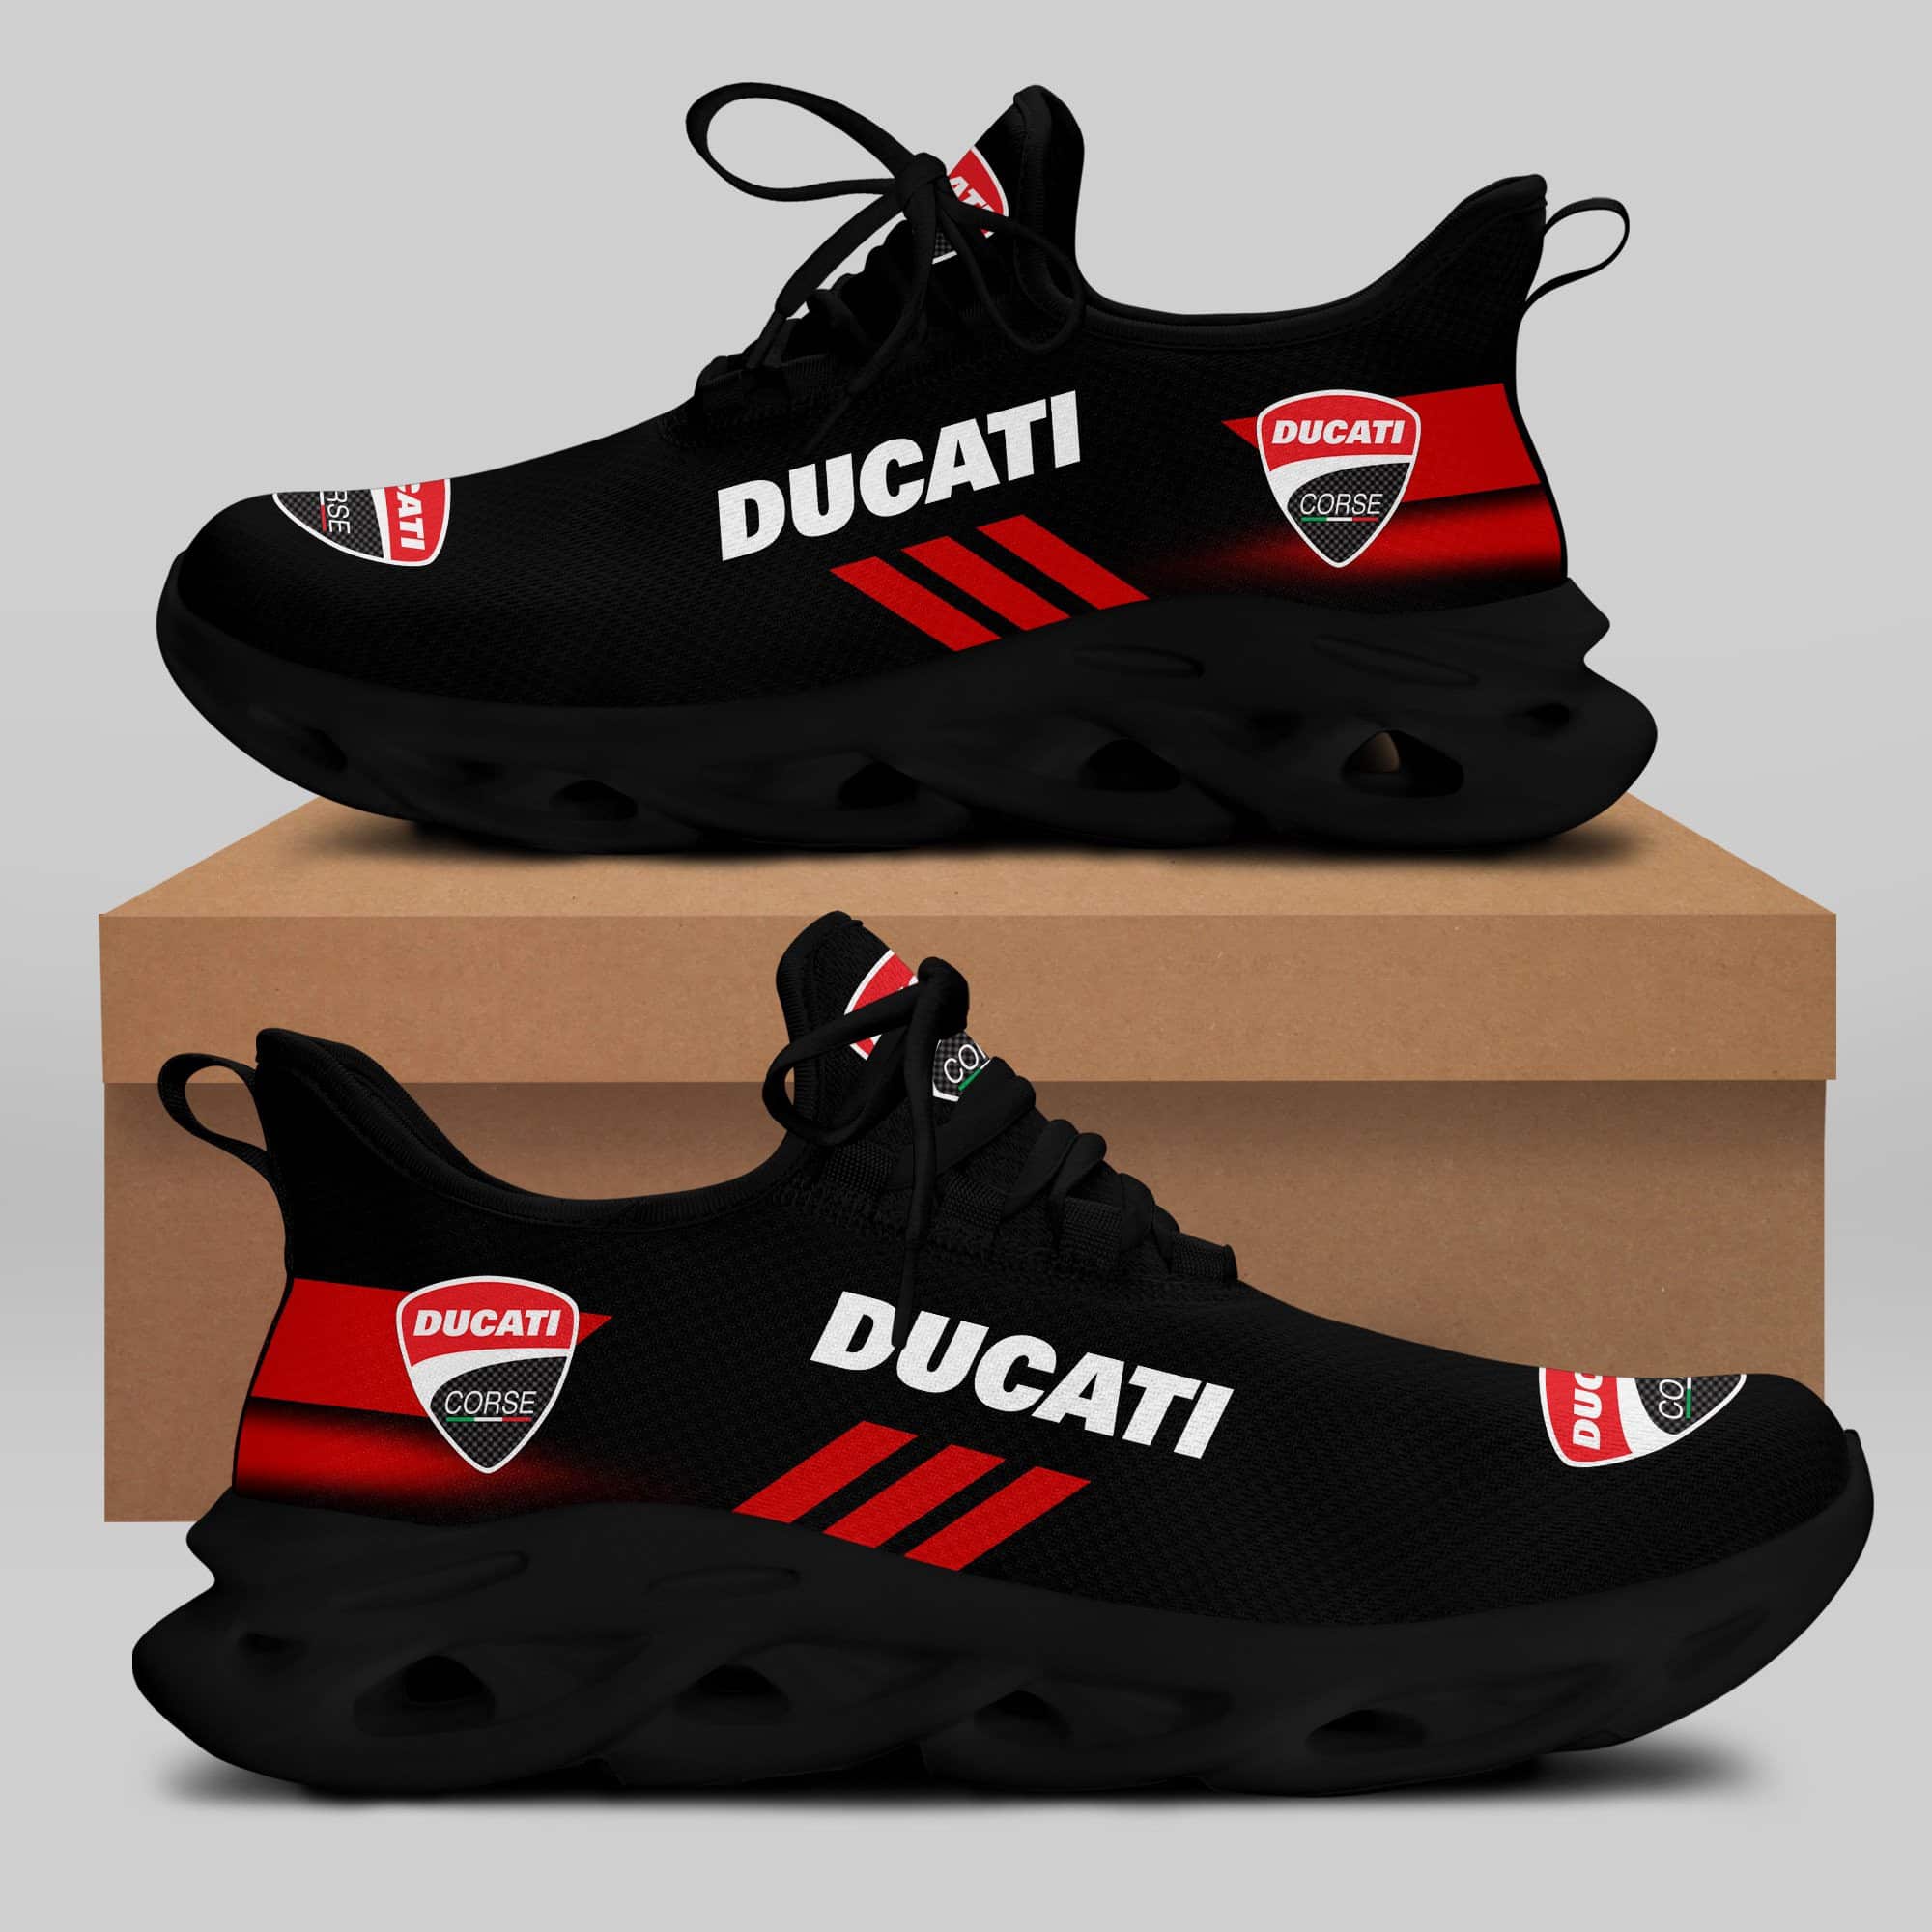 Ducati Racing Running Shoes Max Soul Shoes Sneakers Ver 34 1